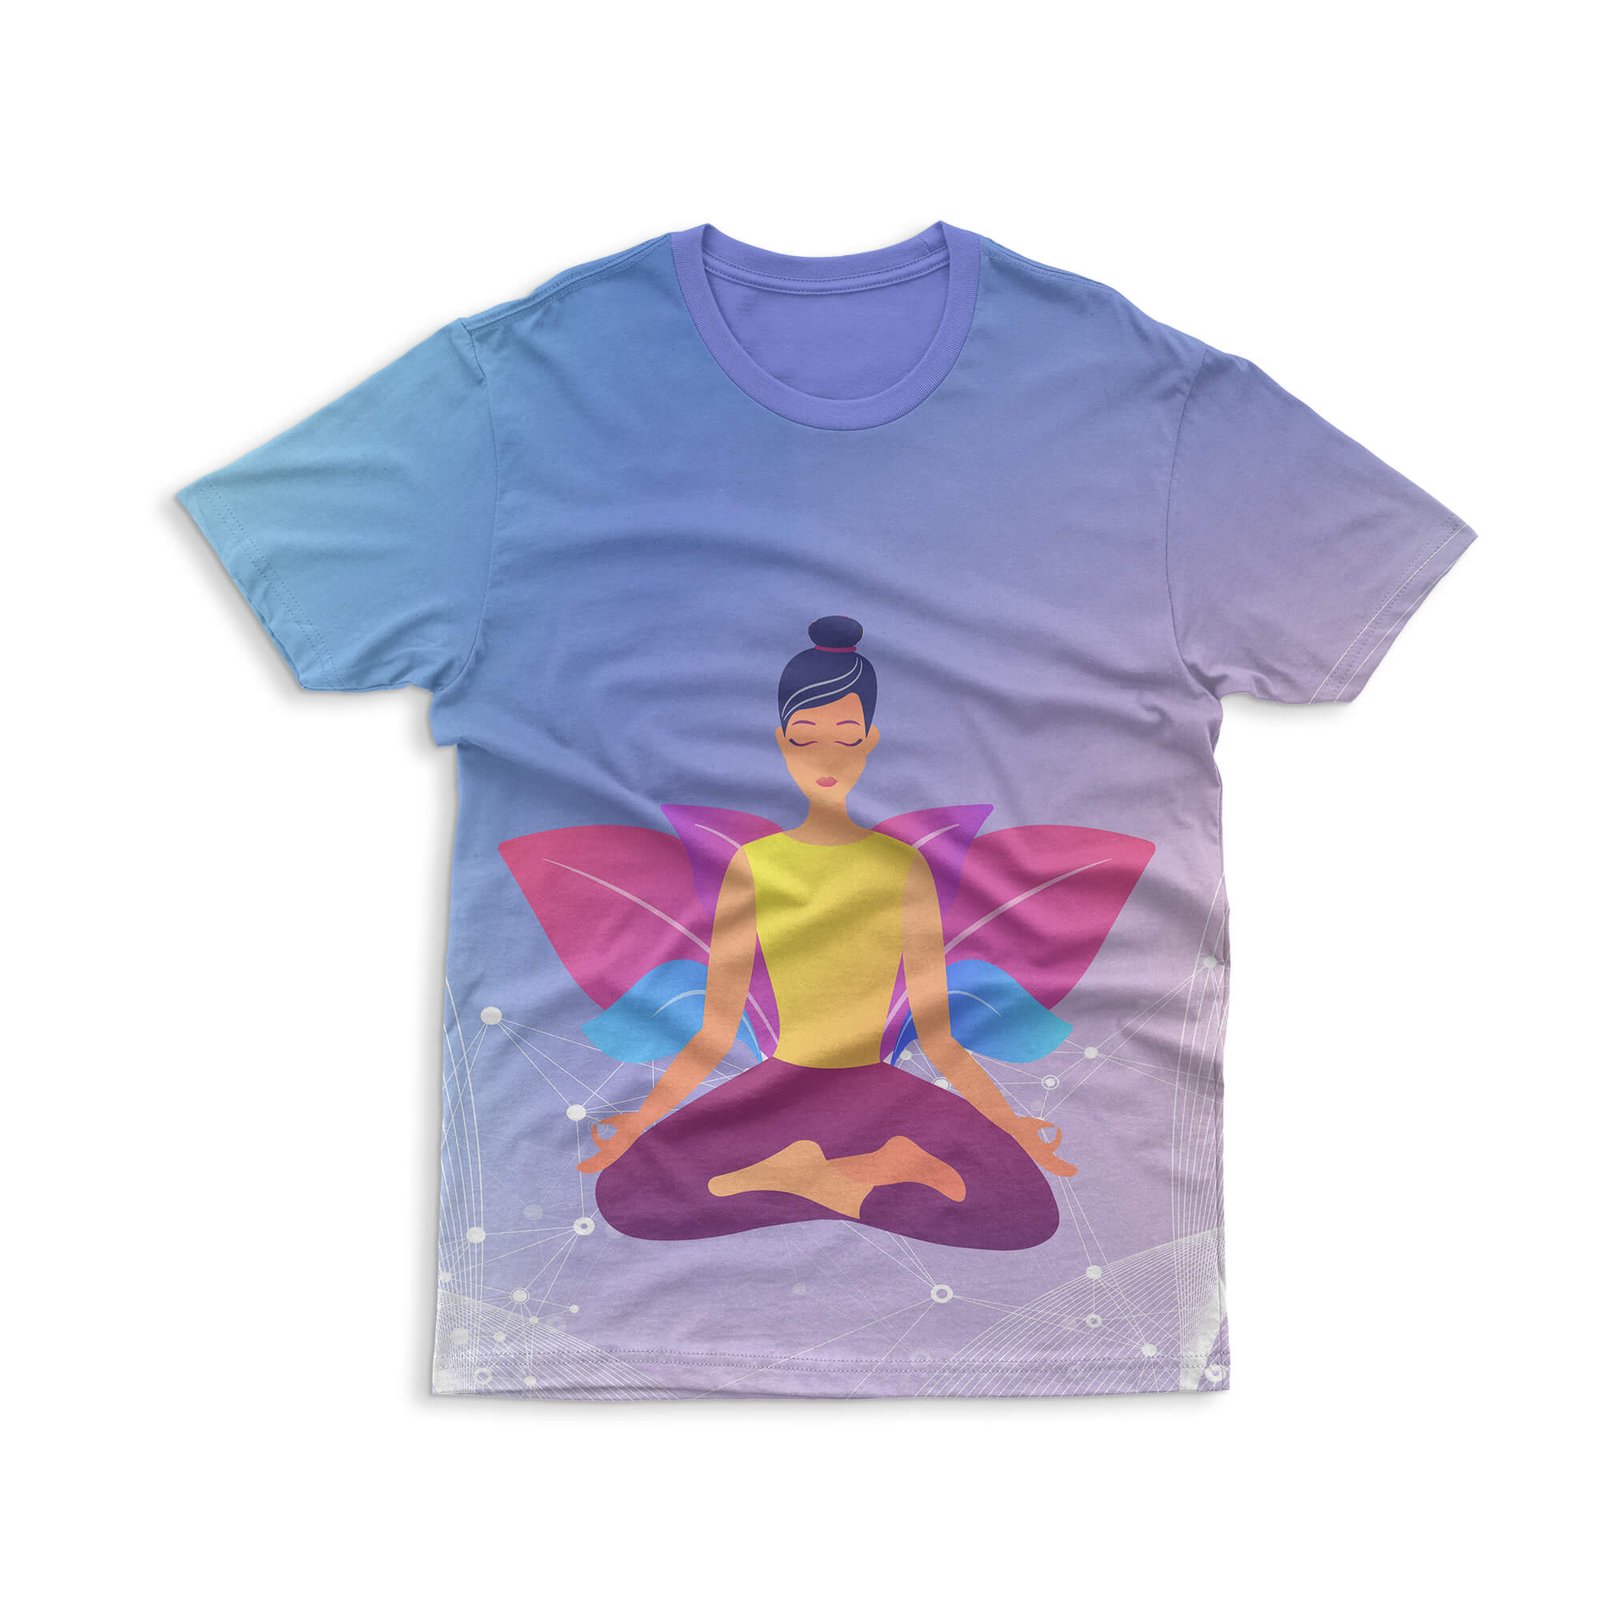 Design Free Yoga T Shirt Mockup PSD Template